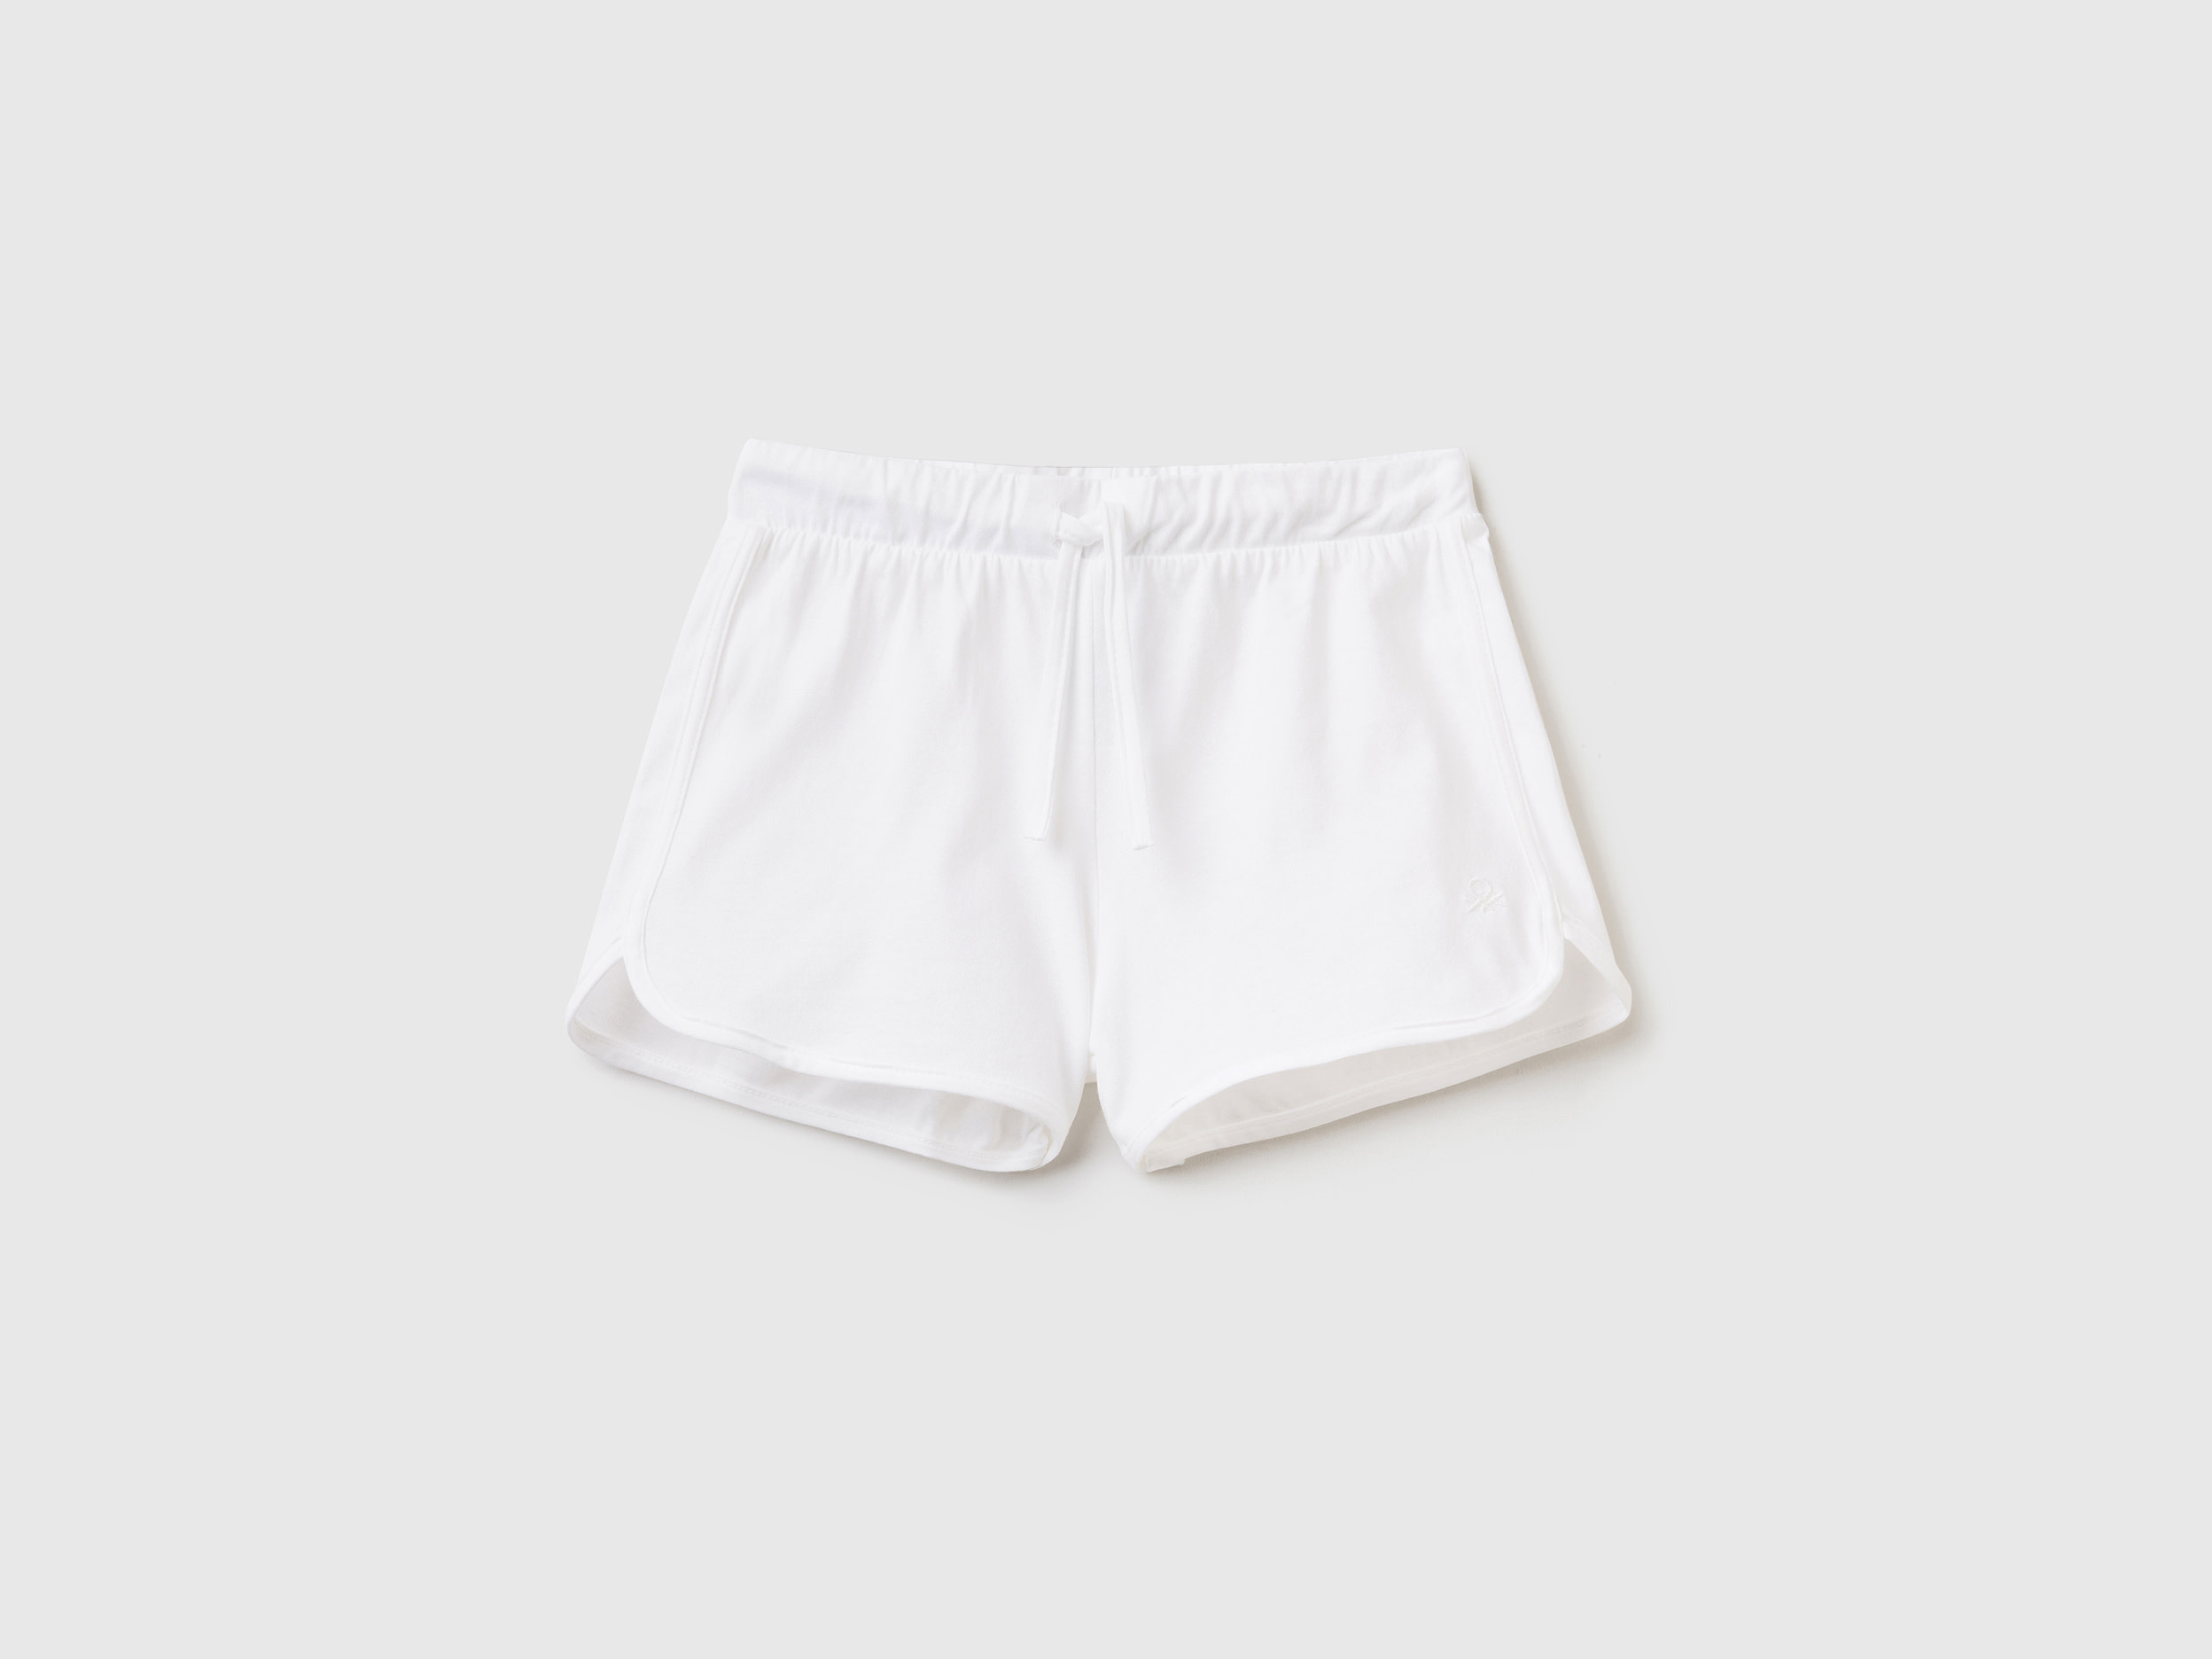 Benetton, Runner Style Shorts In Organic Cotton, size 3XL, White, Kids